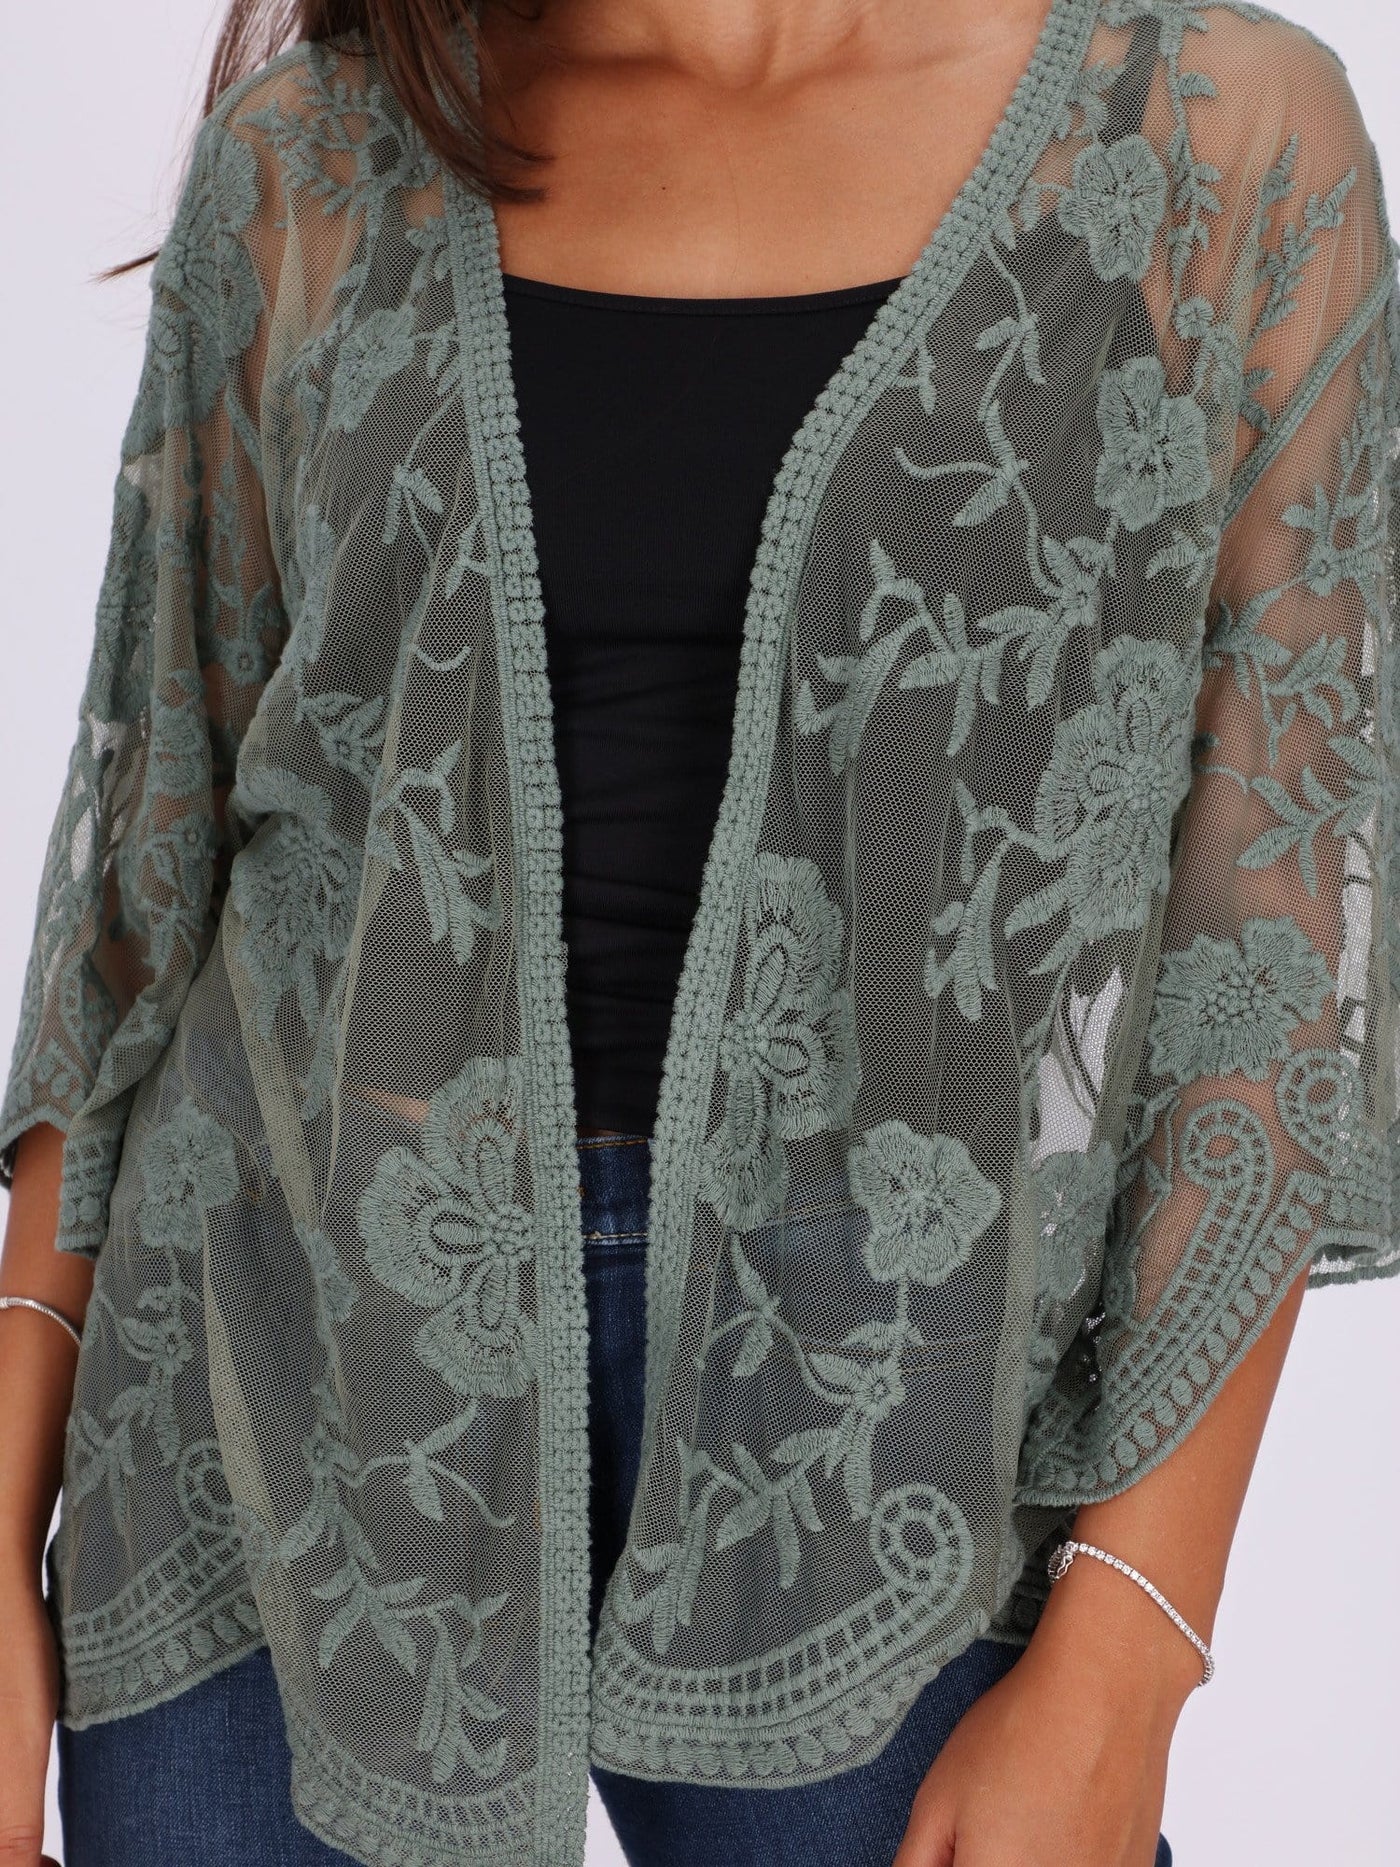 OR Tops & Blouses Kimono Sleeve Beach Lace Jacket